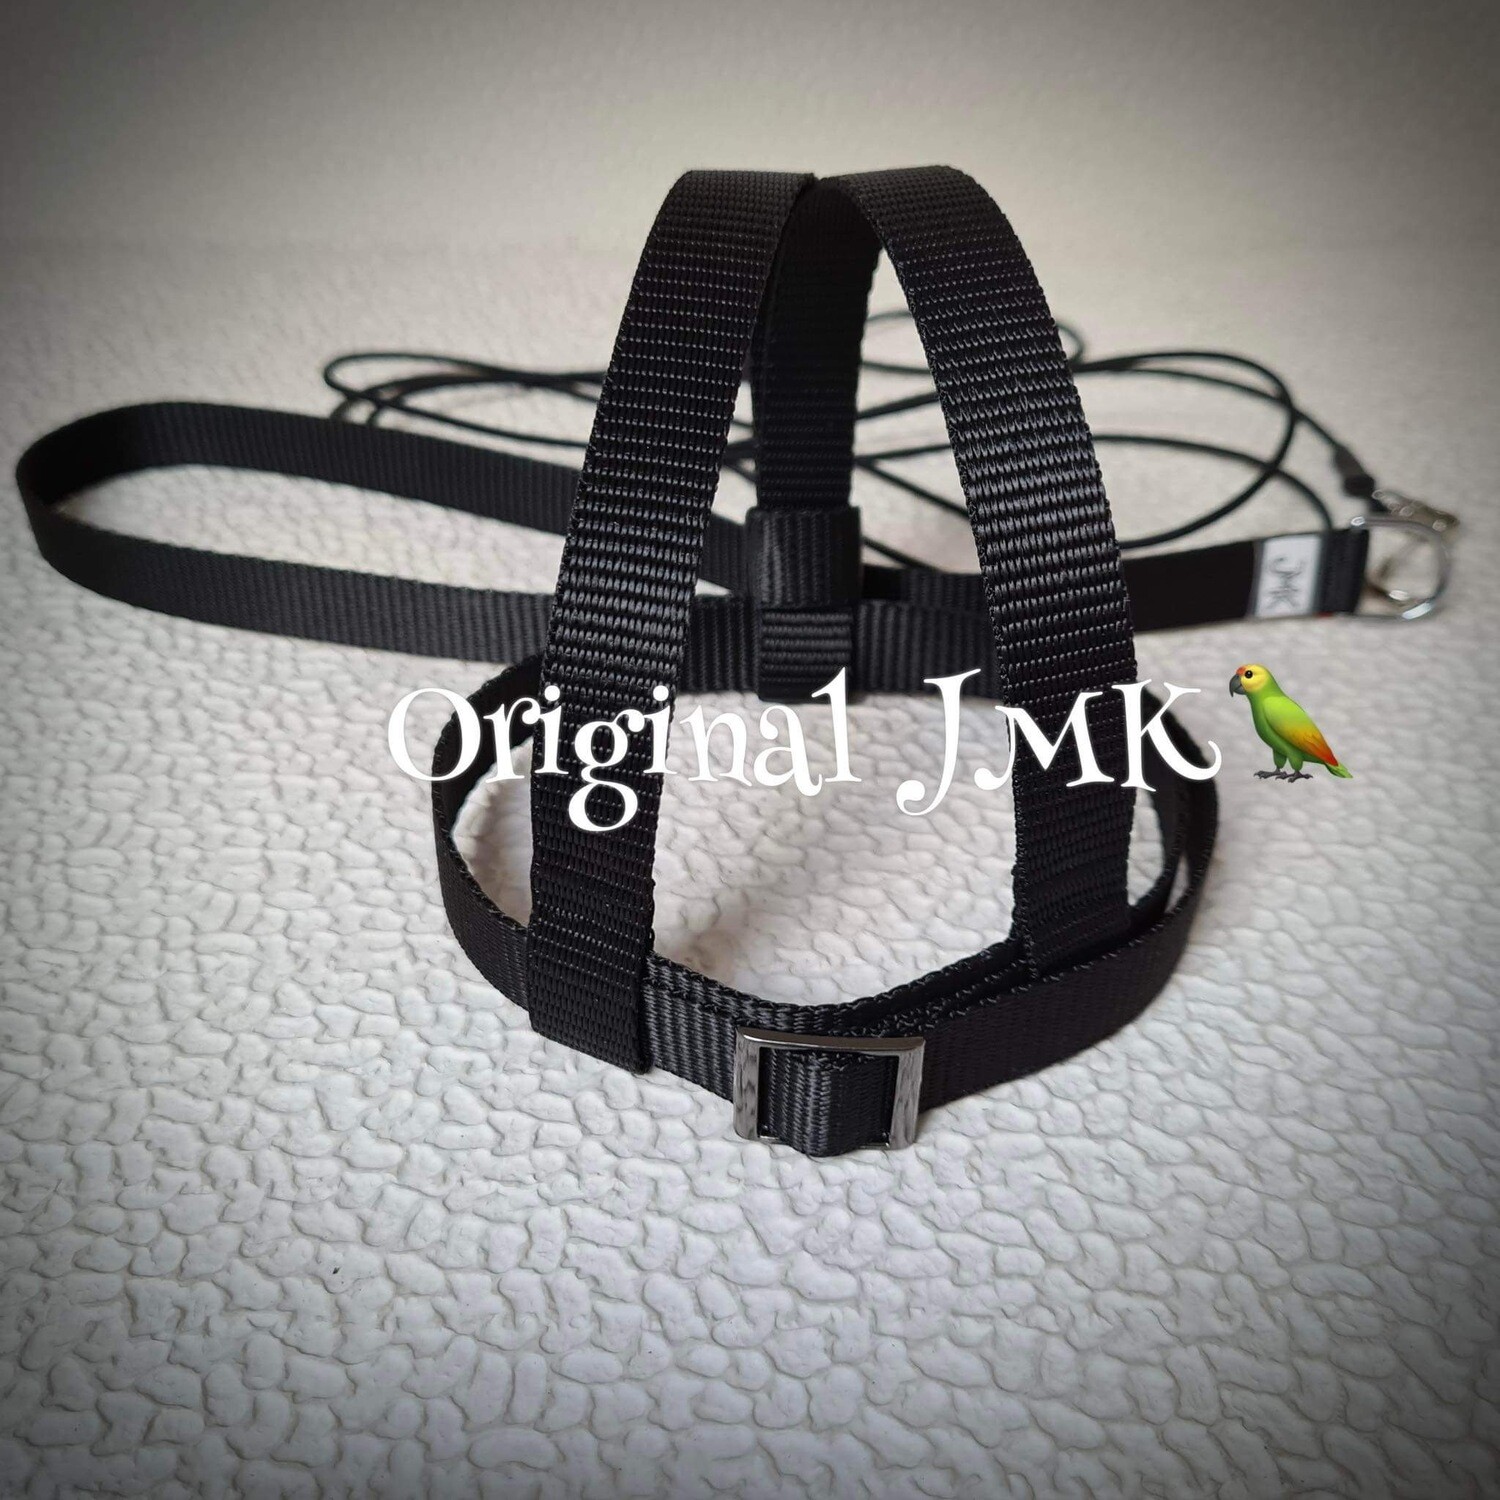 JMK Harness and Leash - Color Black, Size Large: 600-1100 grams: Lg Macaws, Triton, Sm. Moluccan, Black Palm, etc